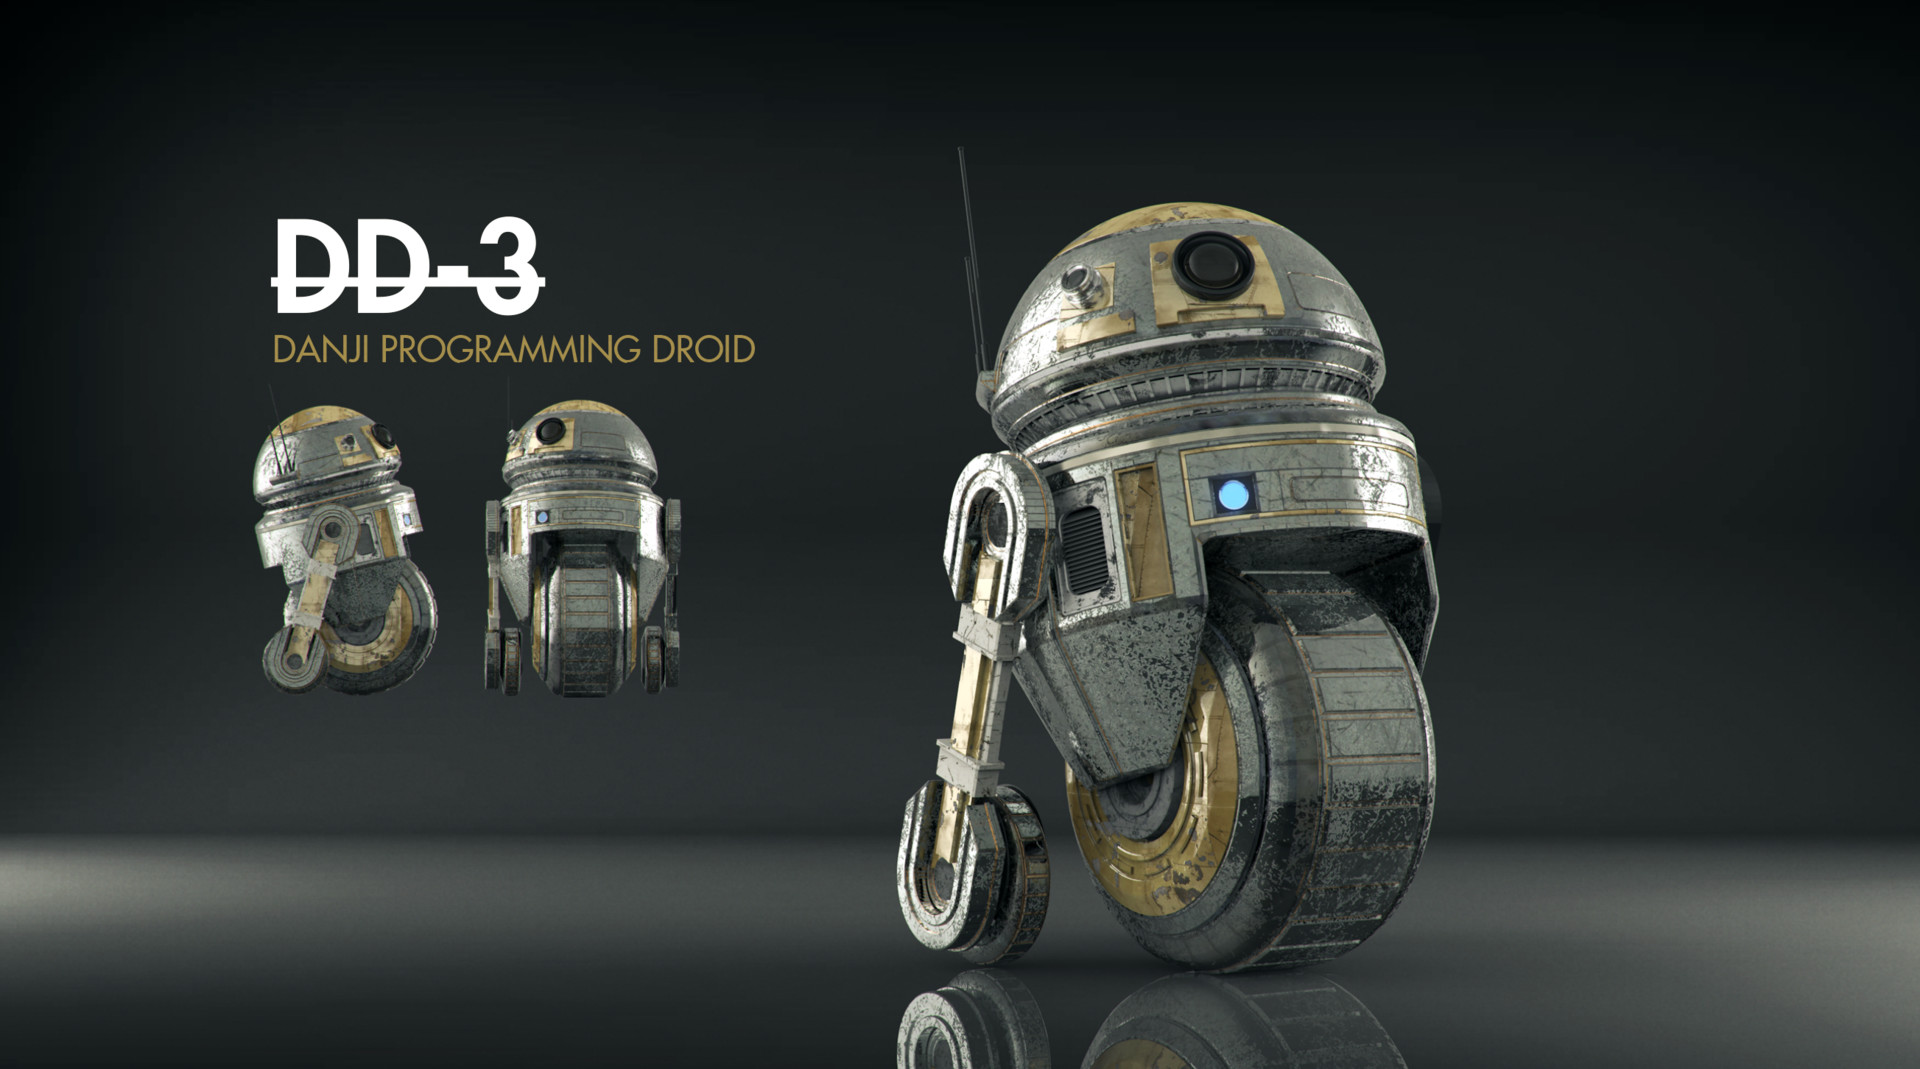 droid_02.jpg